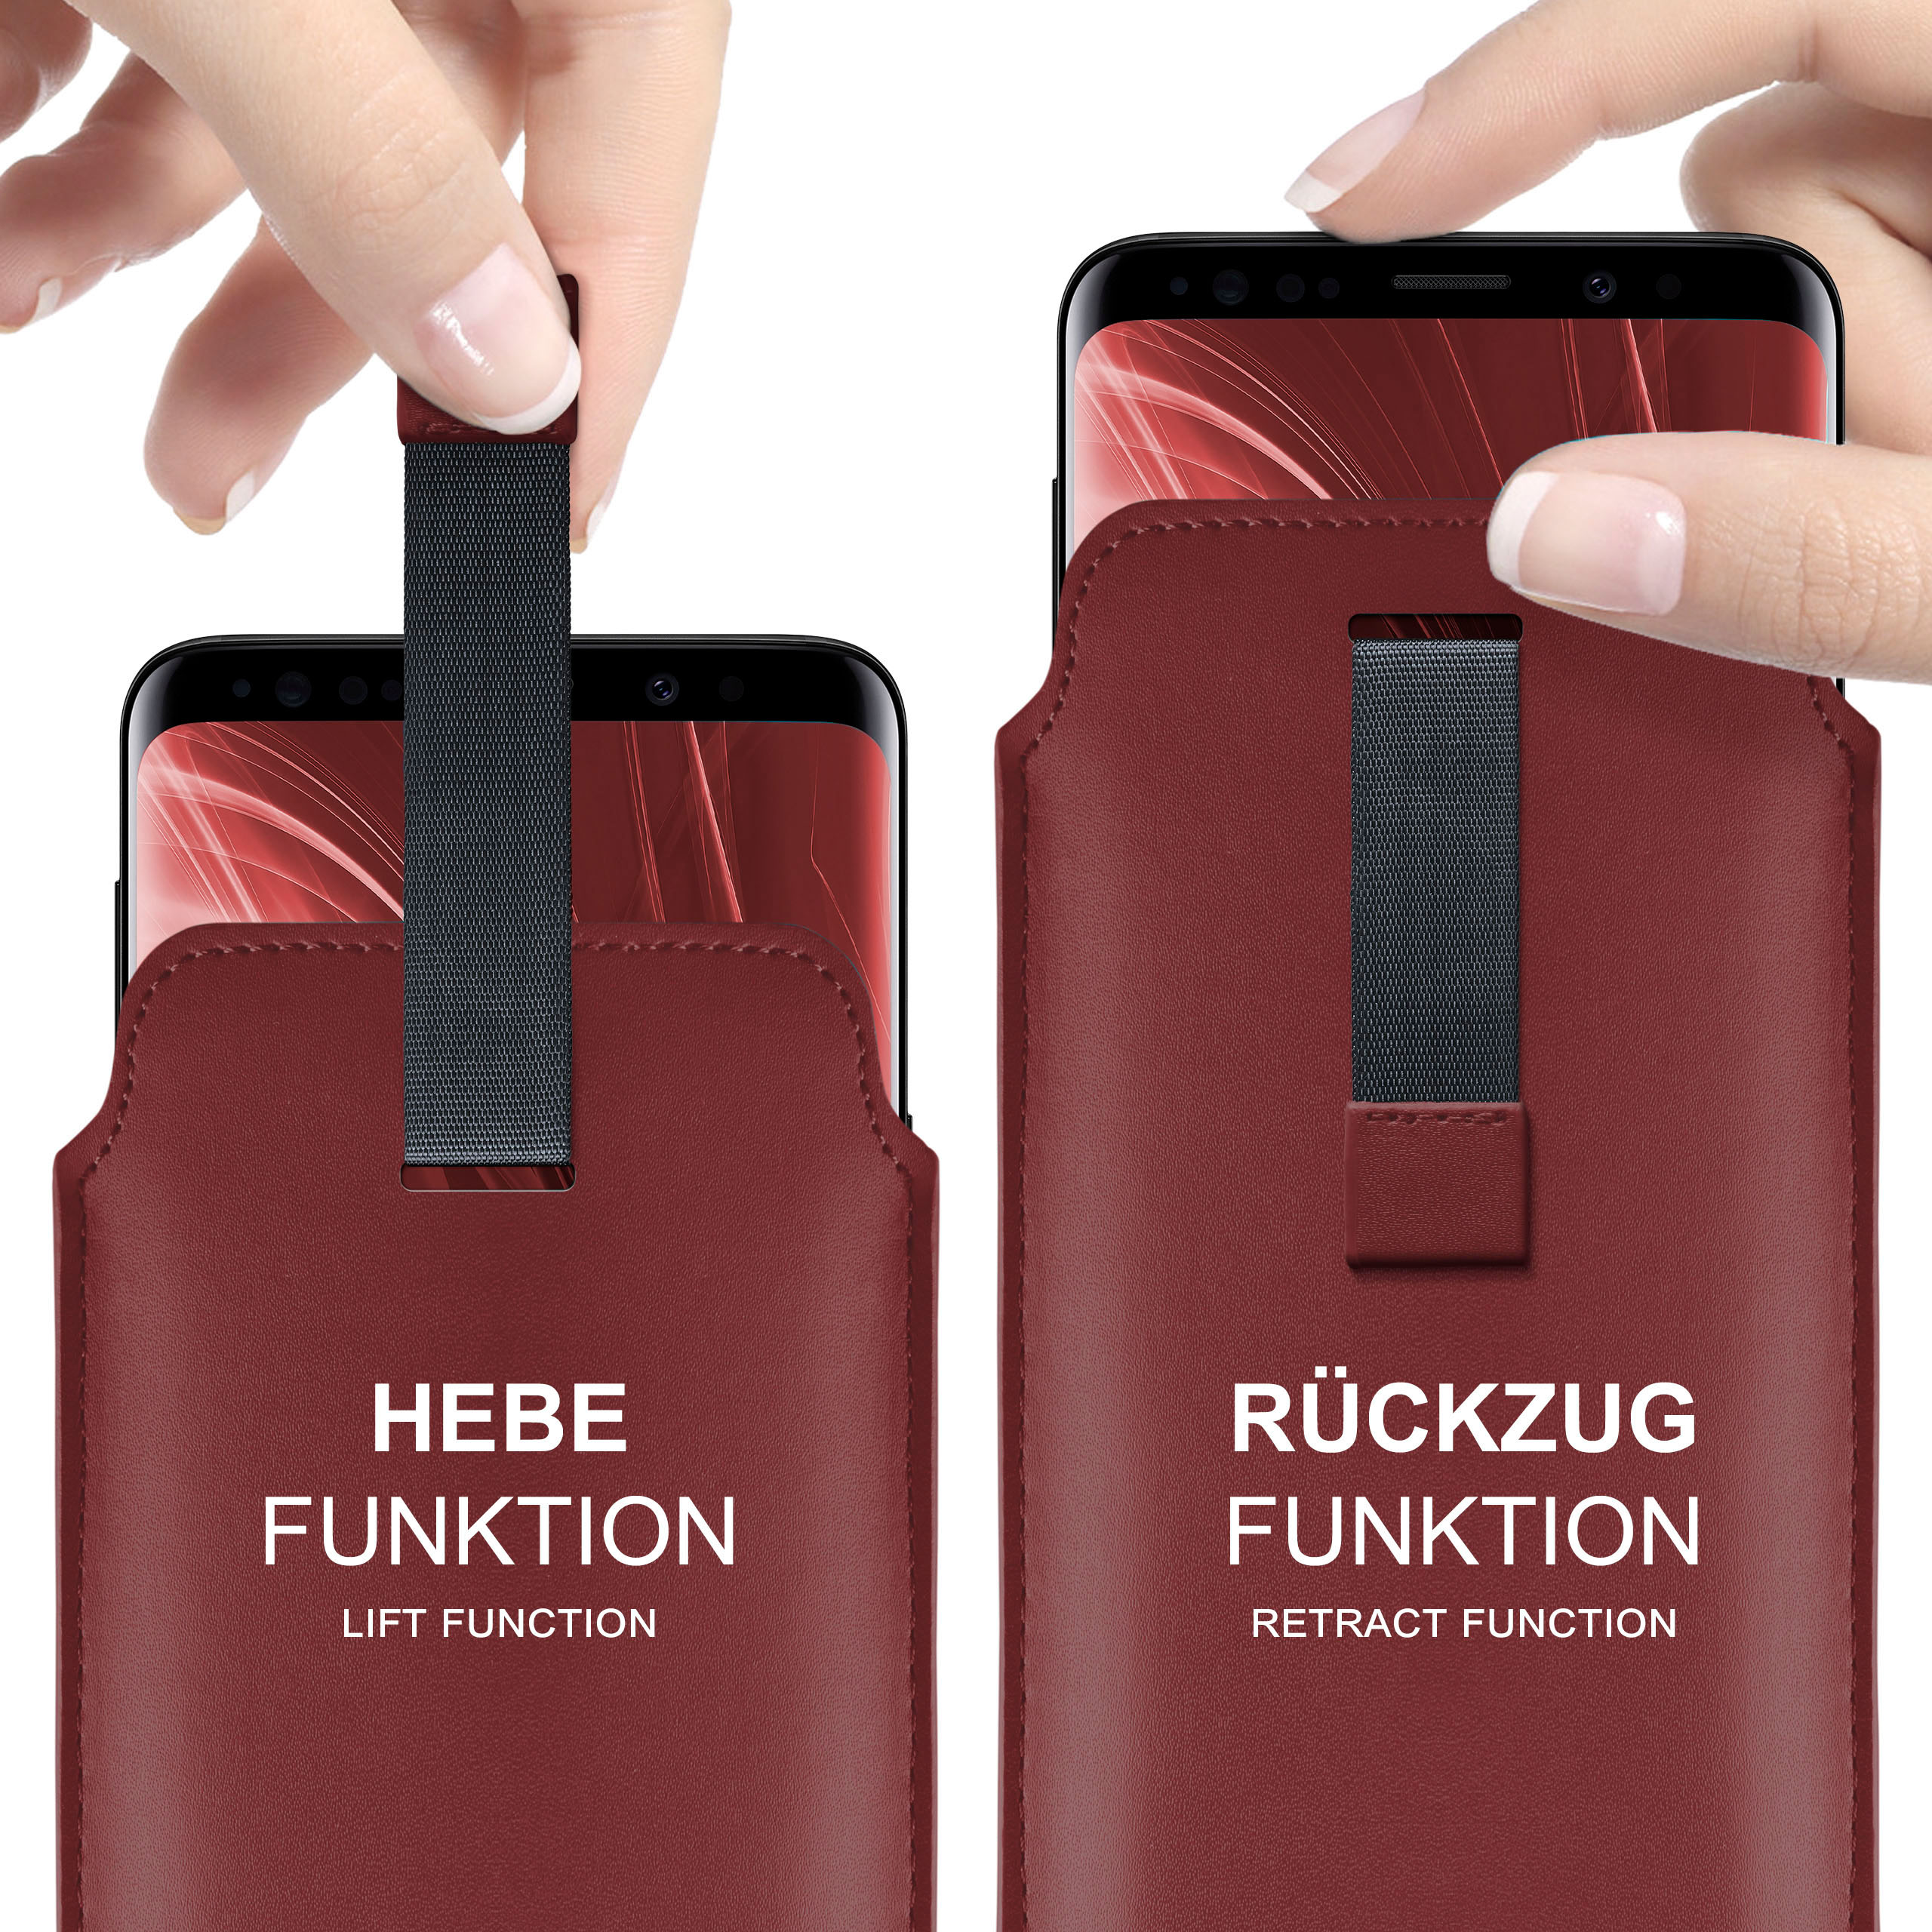 Case, MOEX Cover, Maroon-Red Slide U12 Full Plus, HTC,